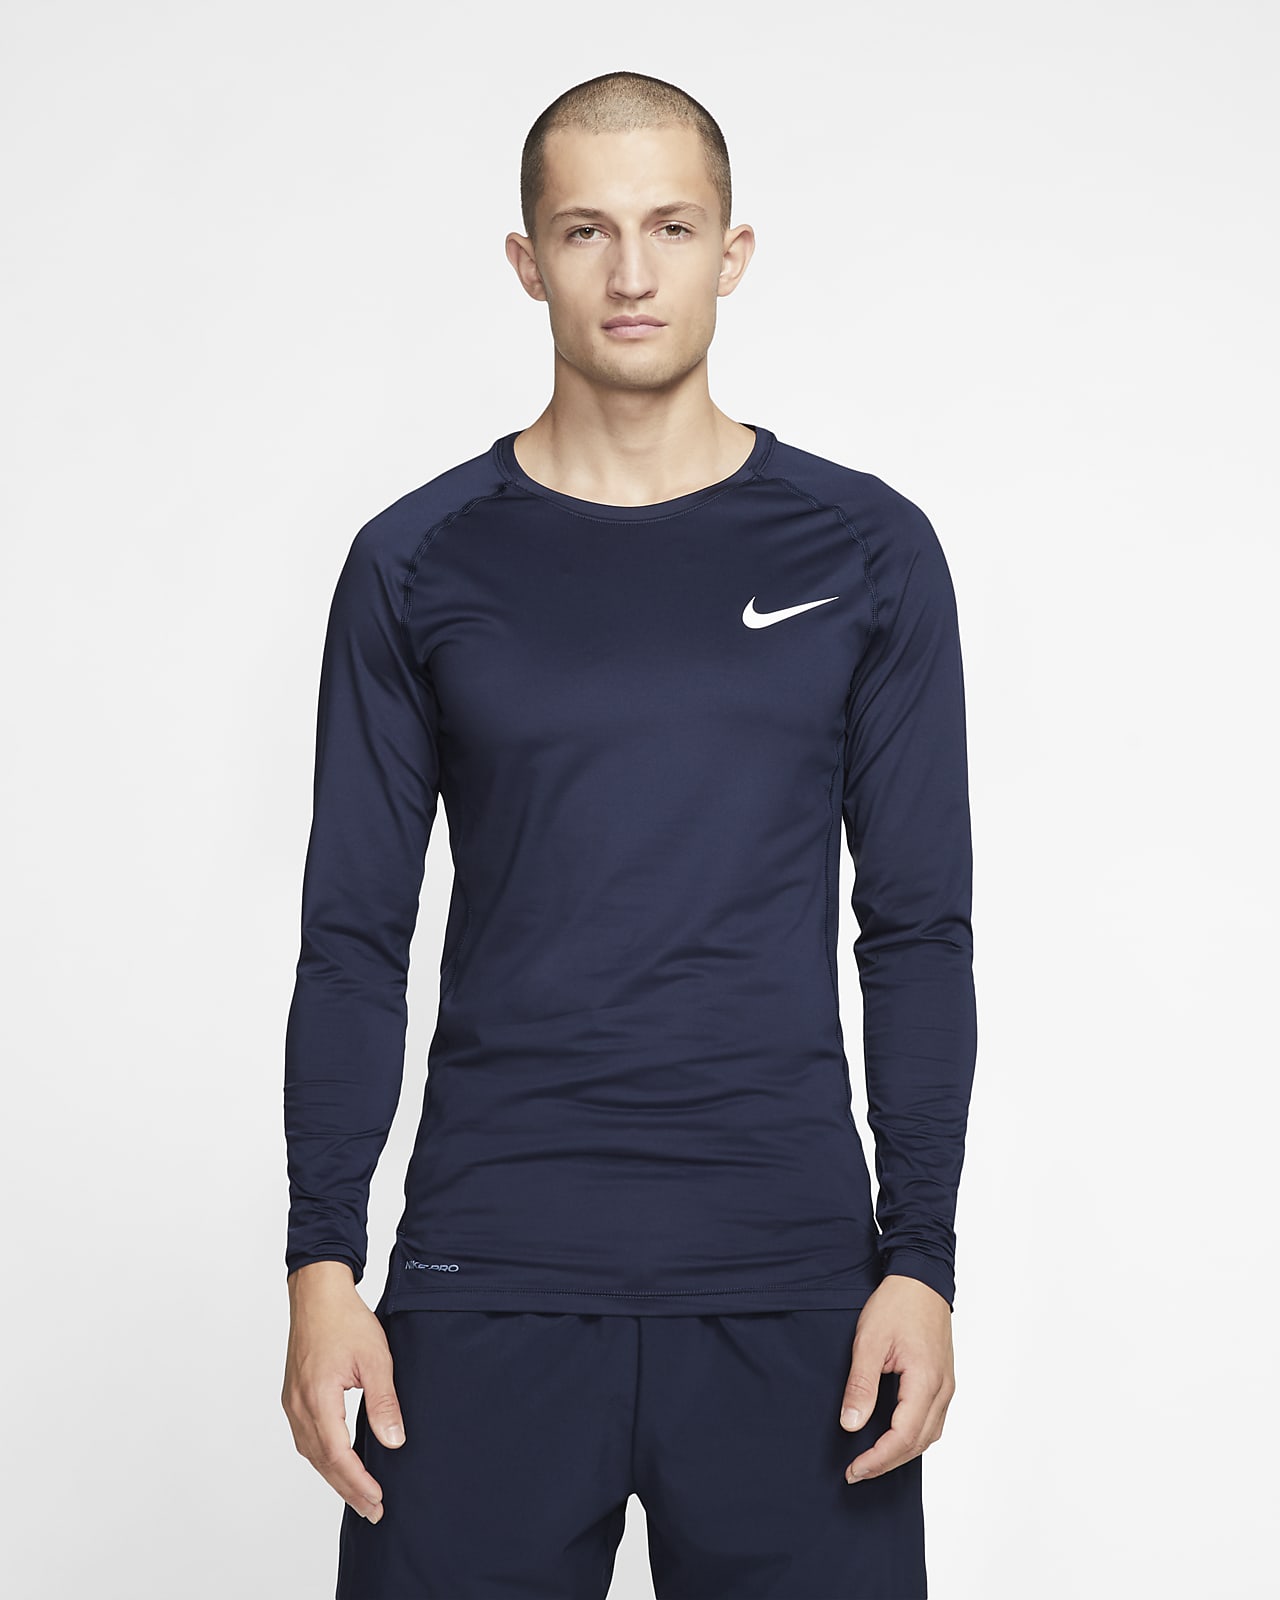 Nike Pro Men's Long-Sleeve Top. Nike ID